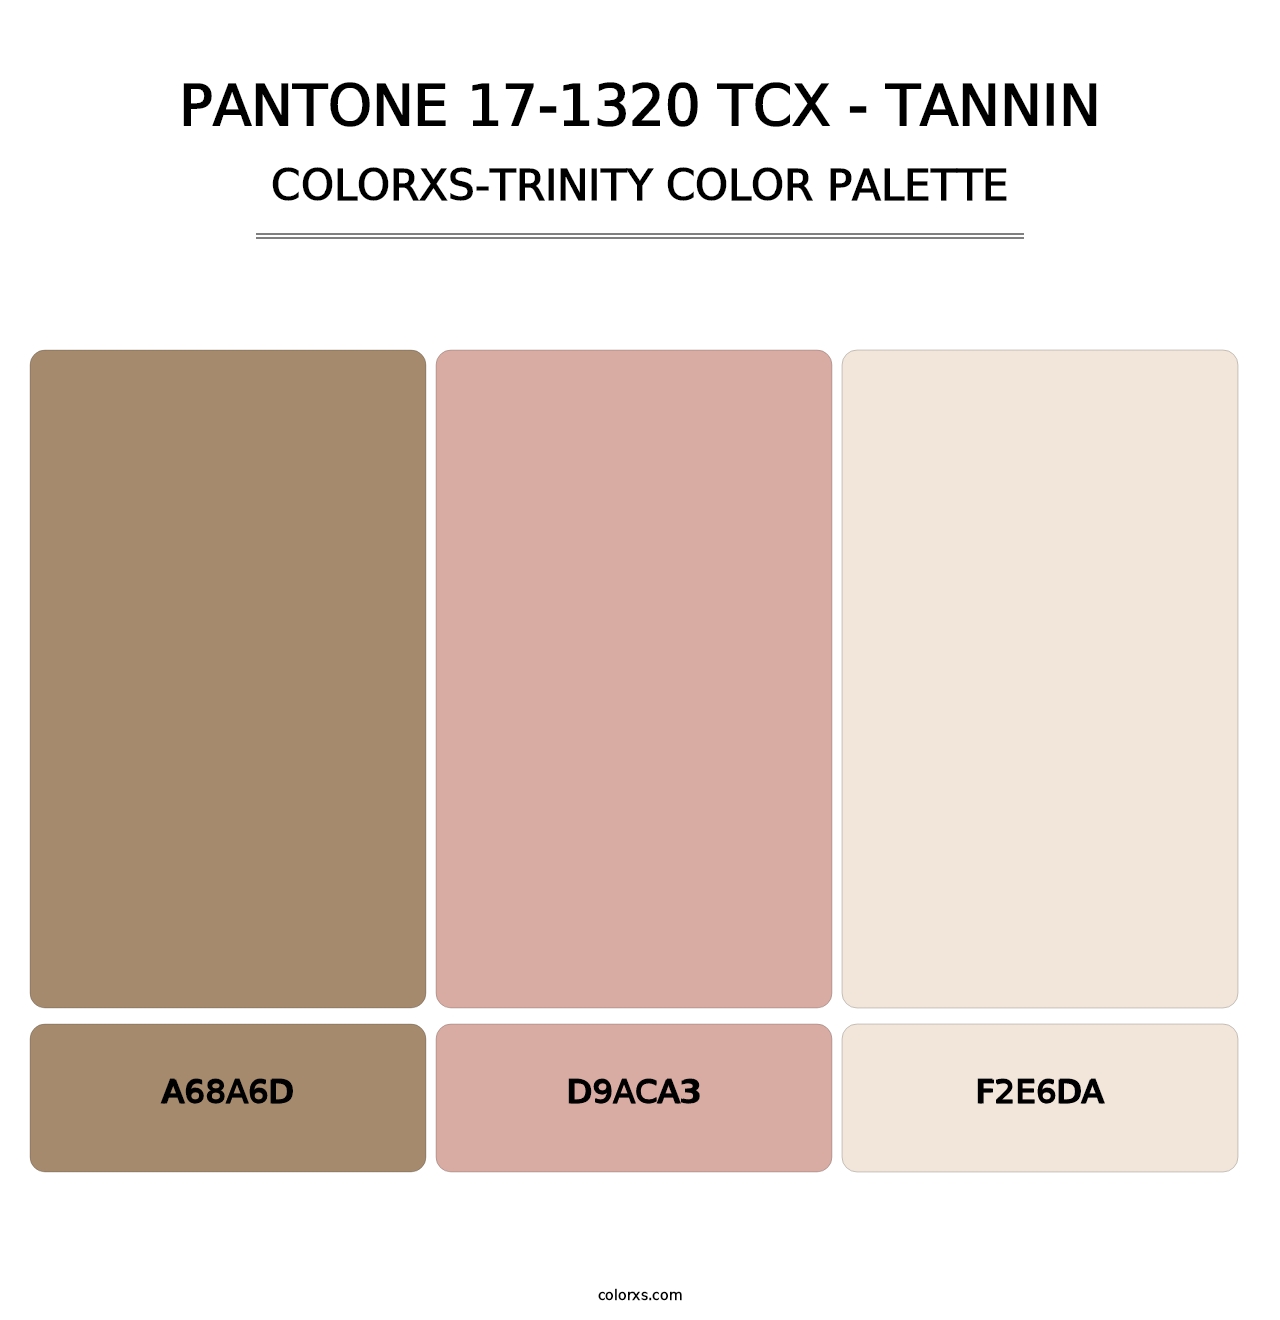 PANTONE 17-1320 TCX - Tannin - Colorxs Trinity Palette